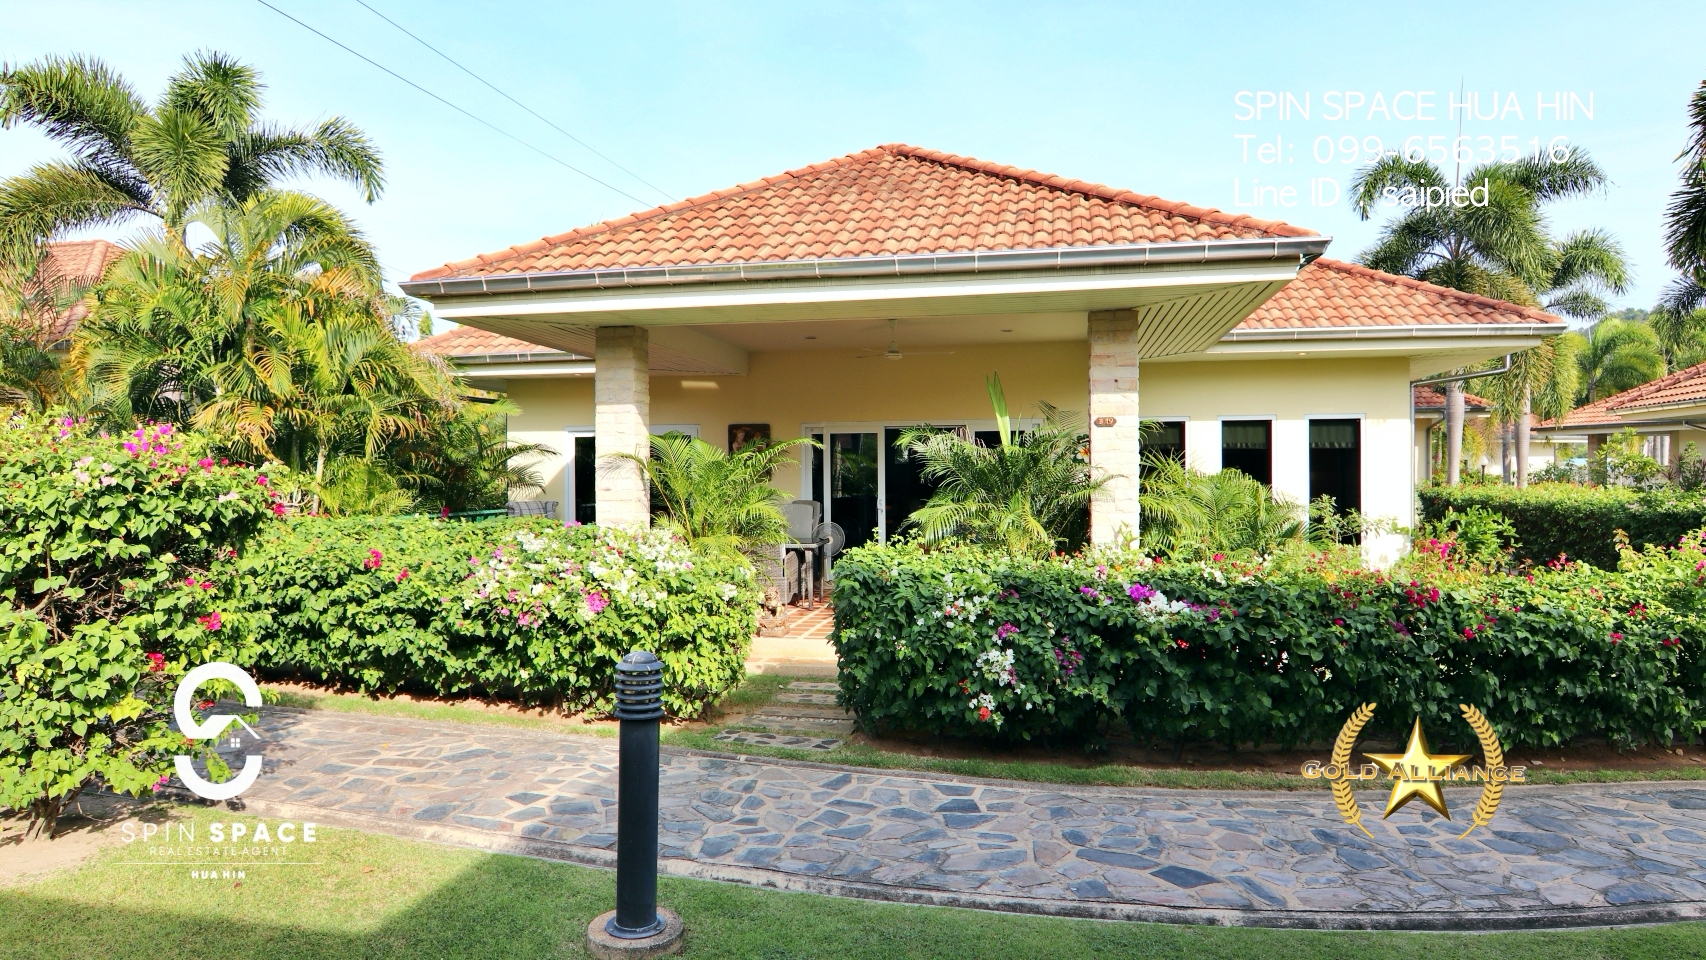 Pineapple village 2 Bedroom Resort Villa For Sale